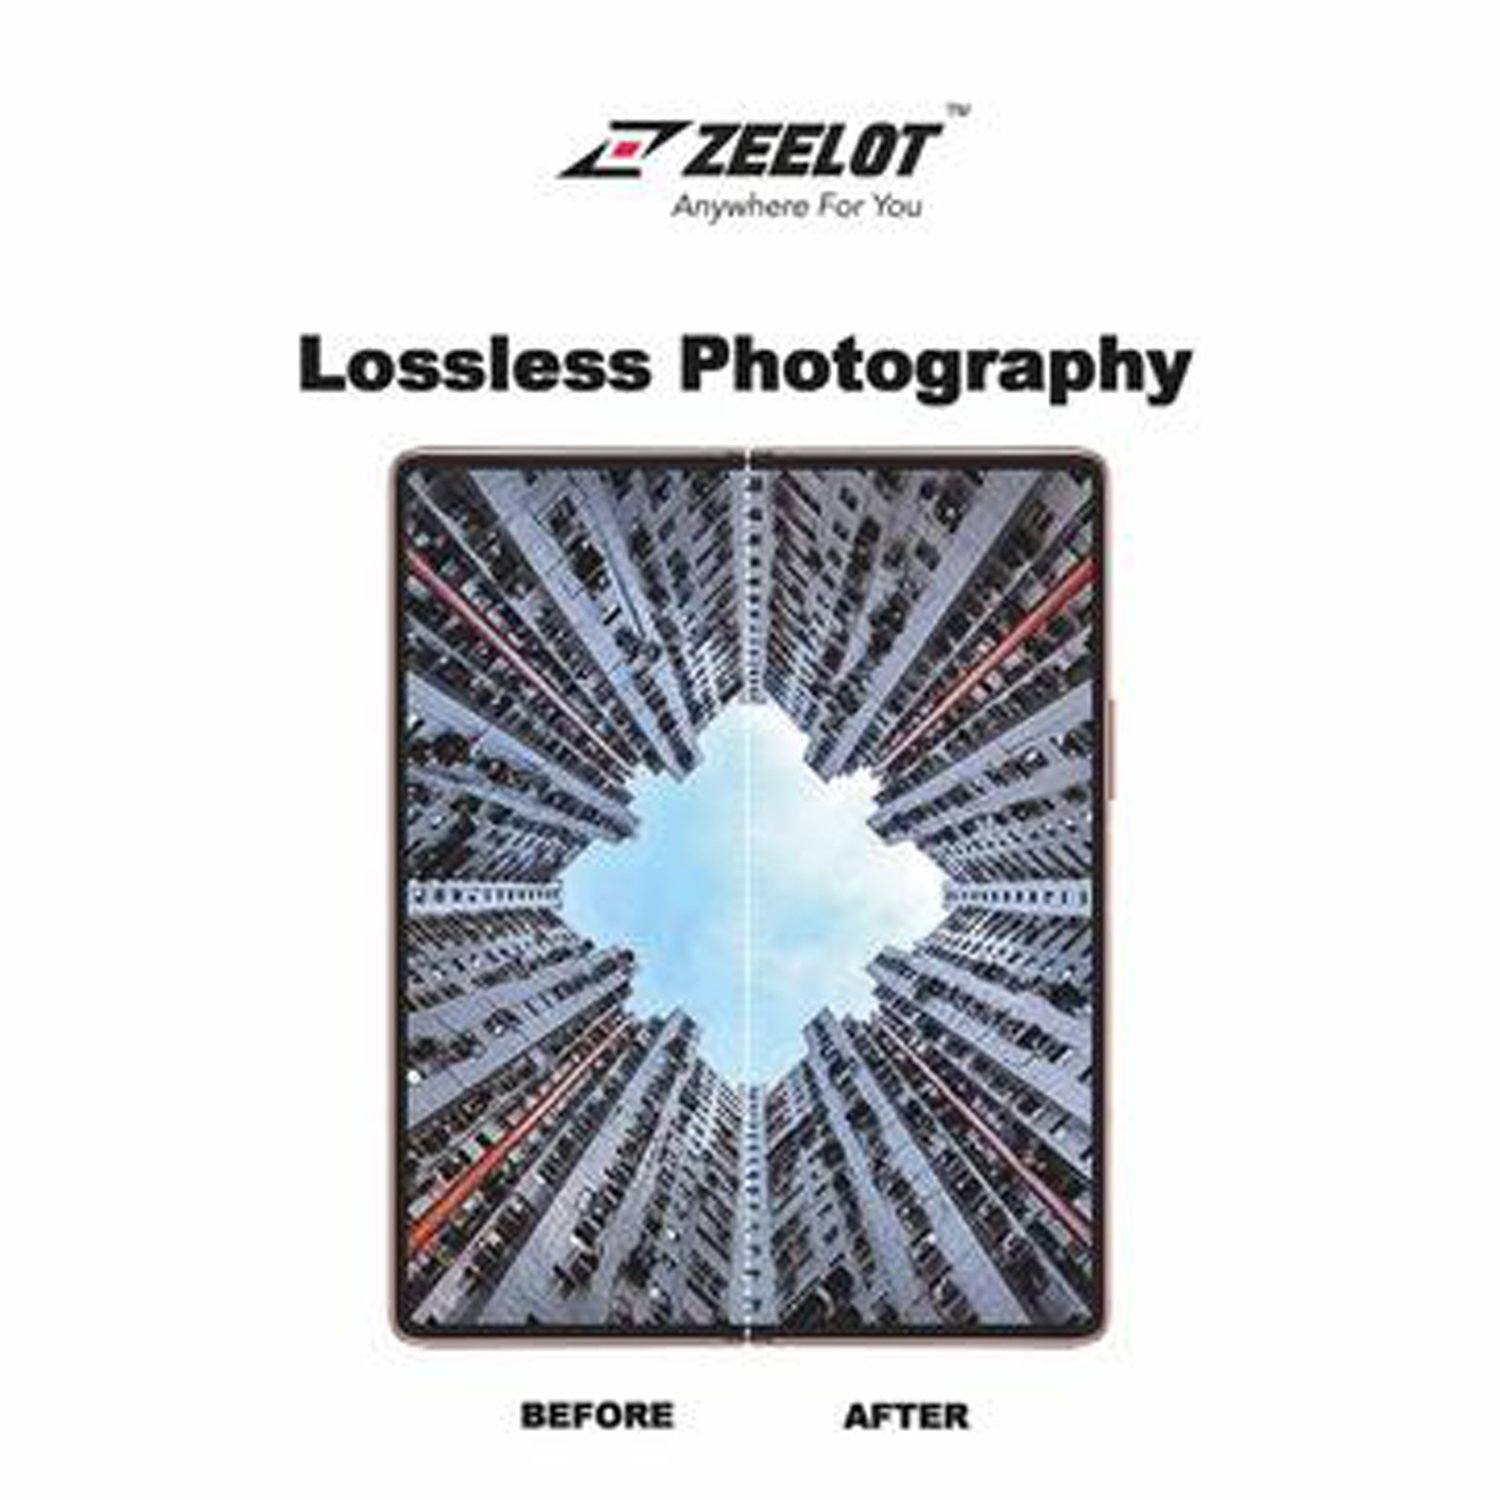 ZEELOT Lens Protector for Galaxy Z Fold 2, Black Default Zeelot 